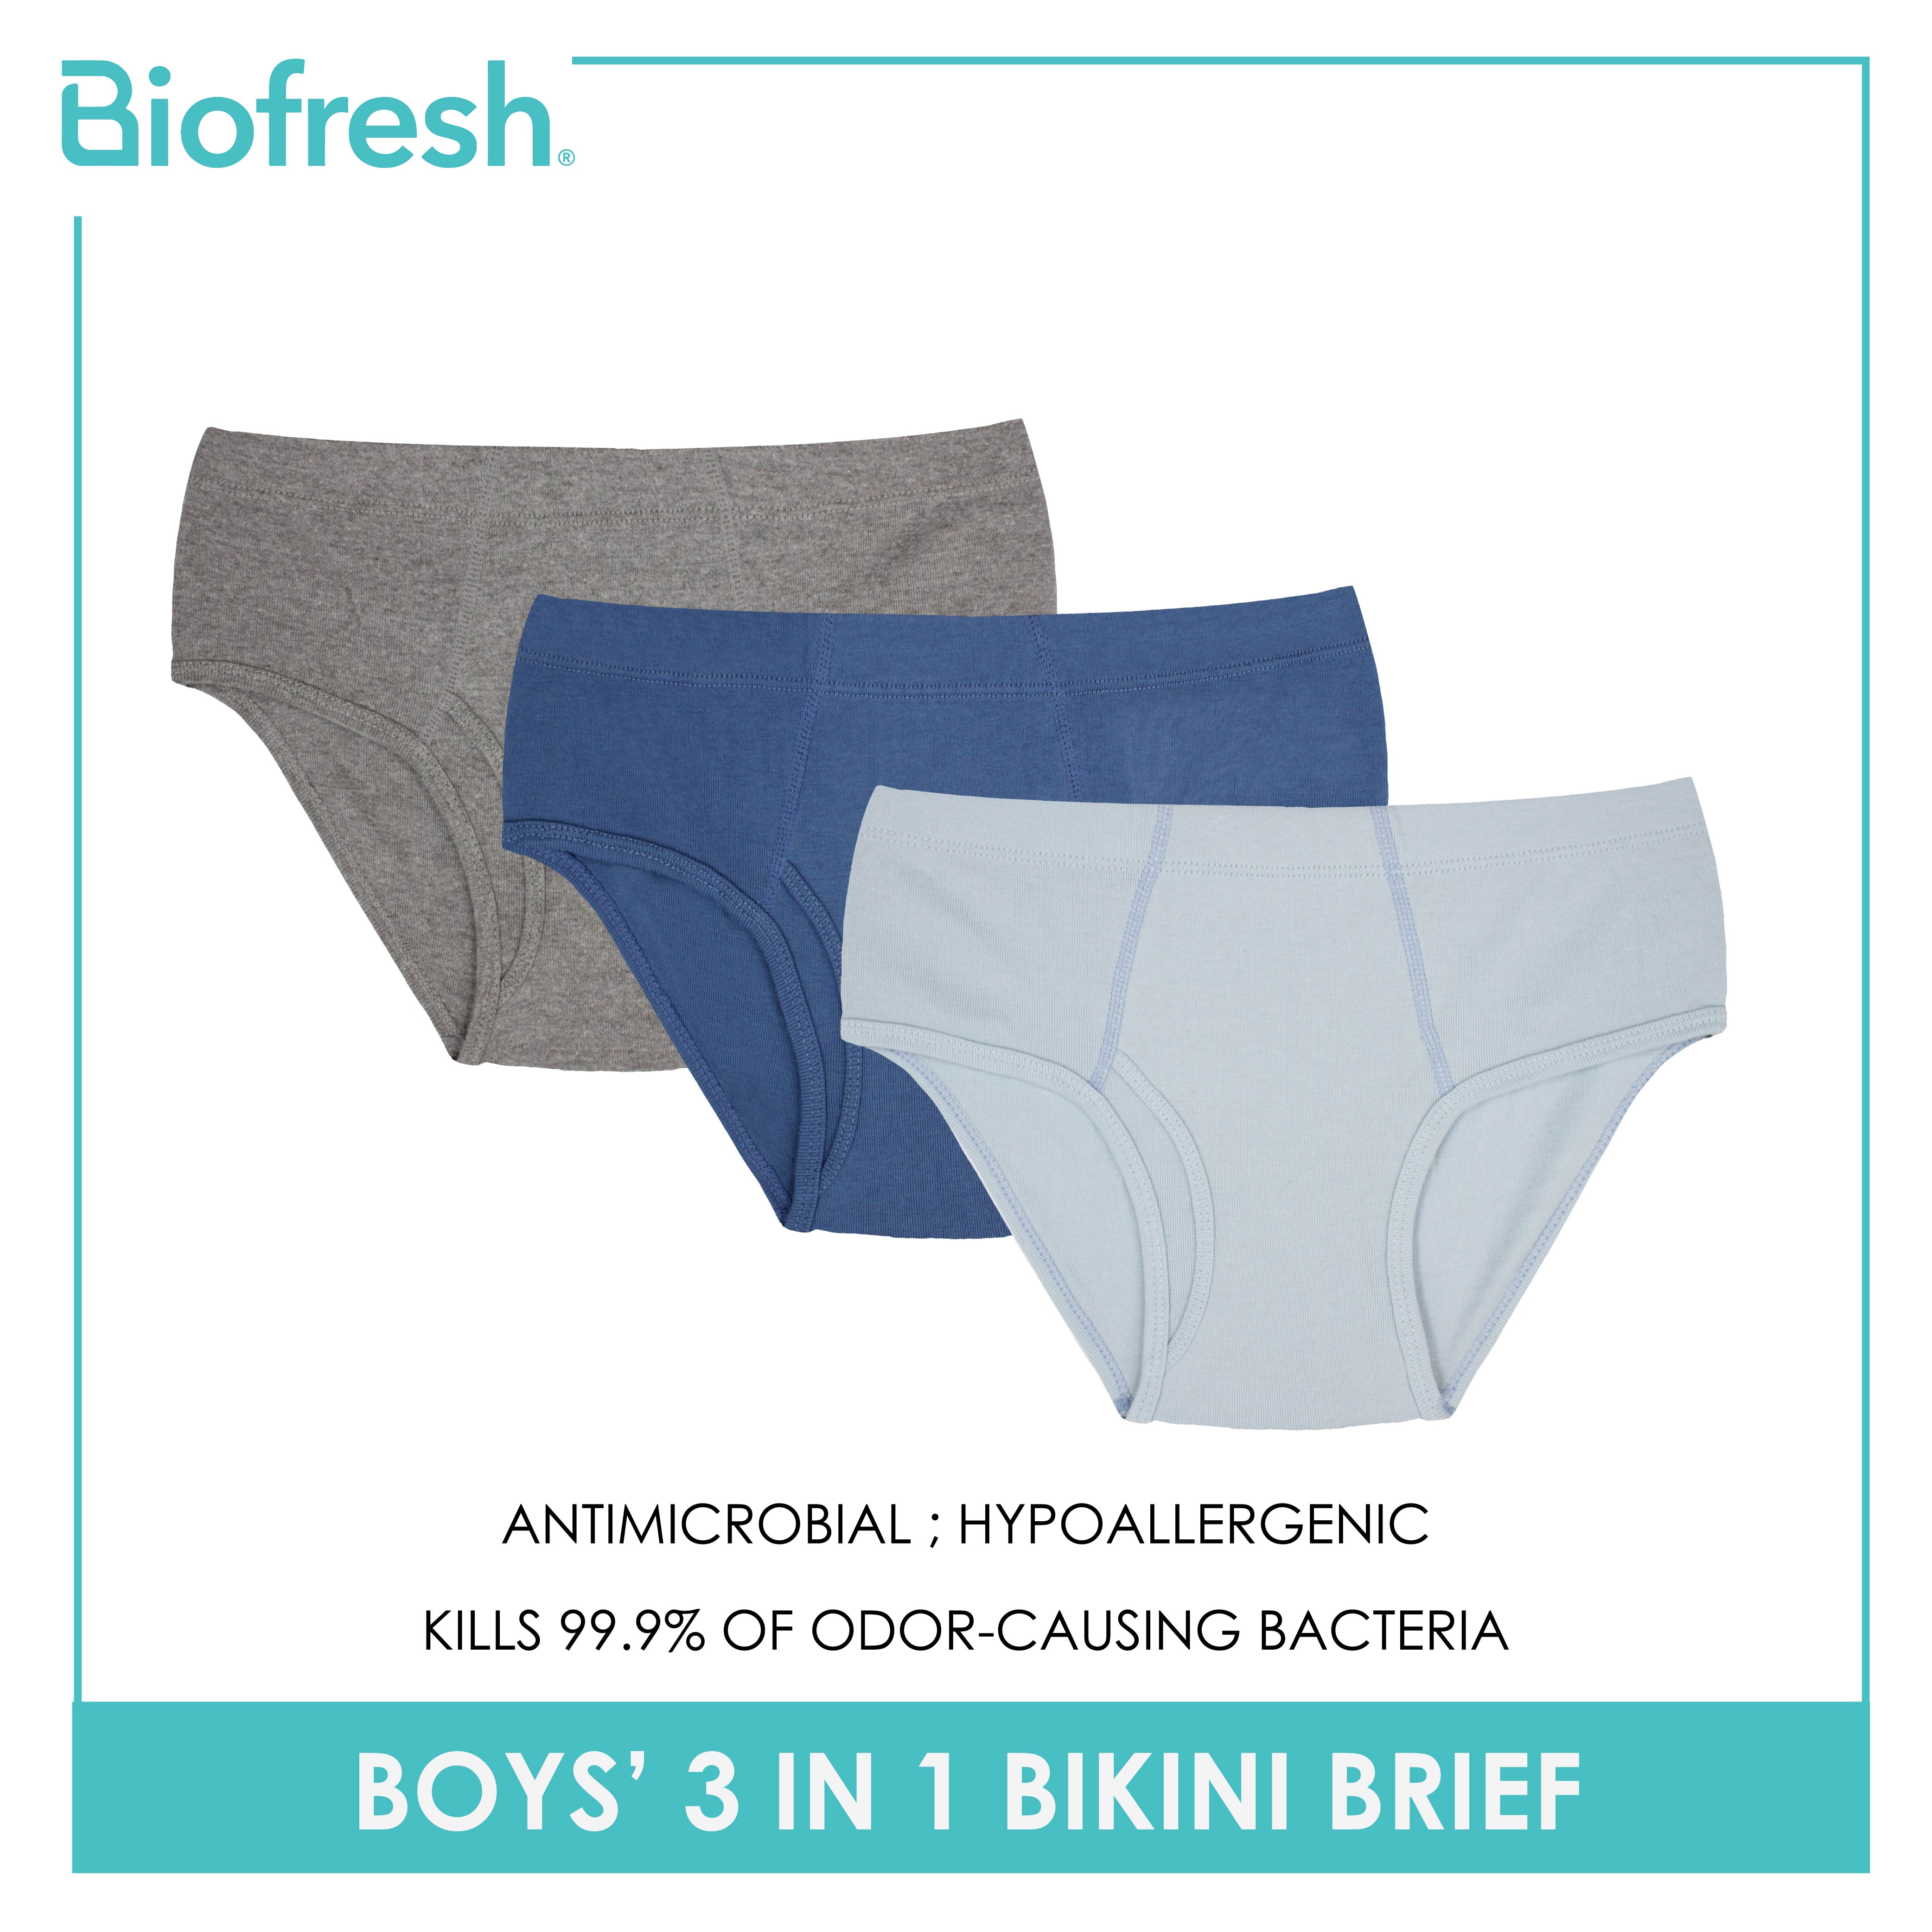 Biofresh Men's Antimicrobial Cotton Bikini Brief 3 pieces in a pack UMBSG1